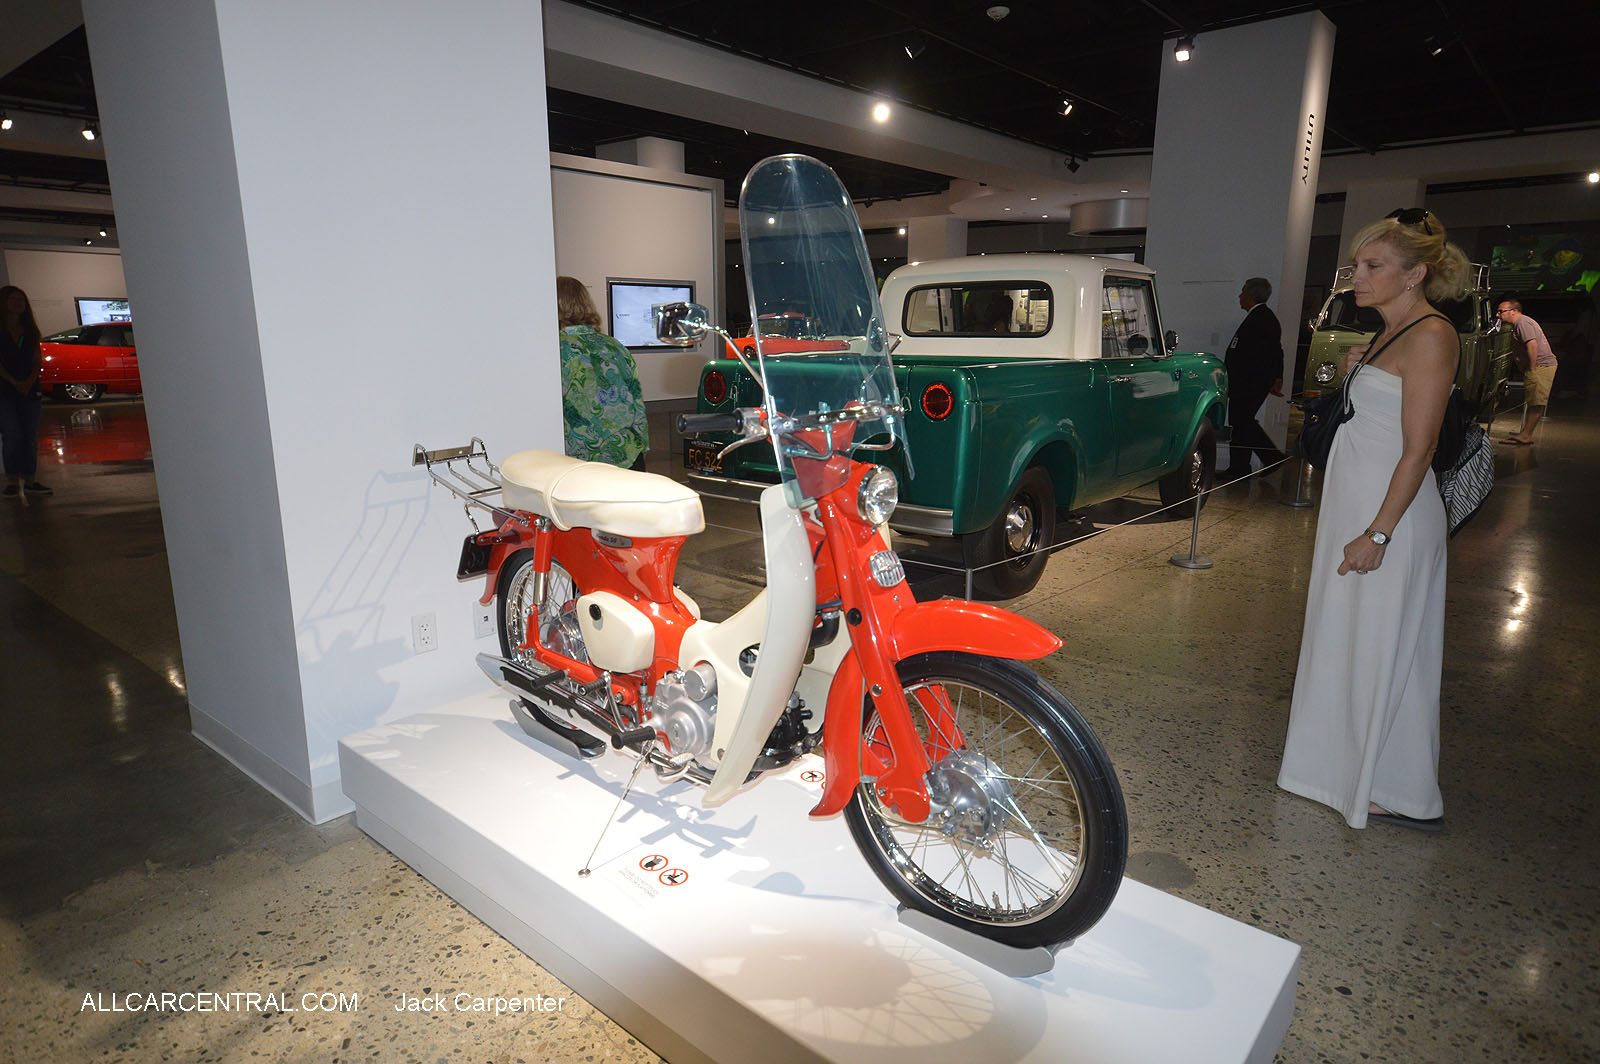   Petersen Automotive Museum 
2016